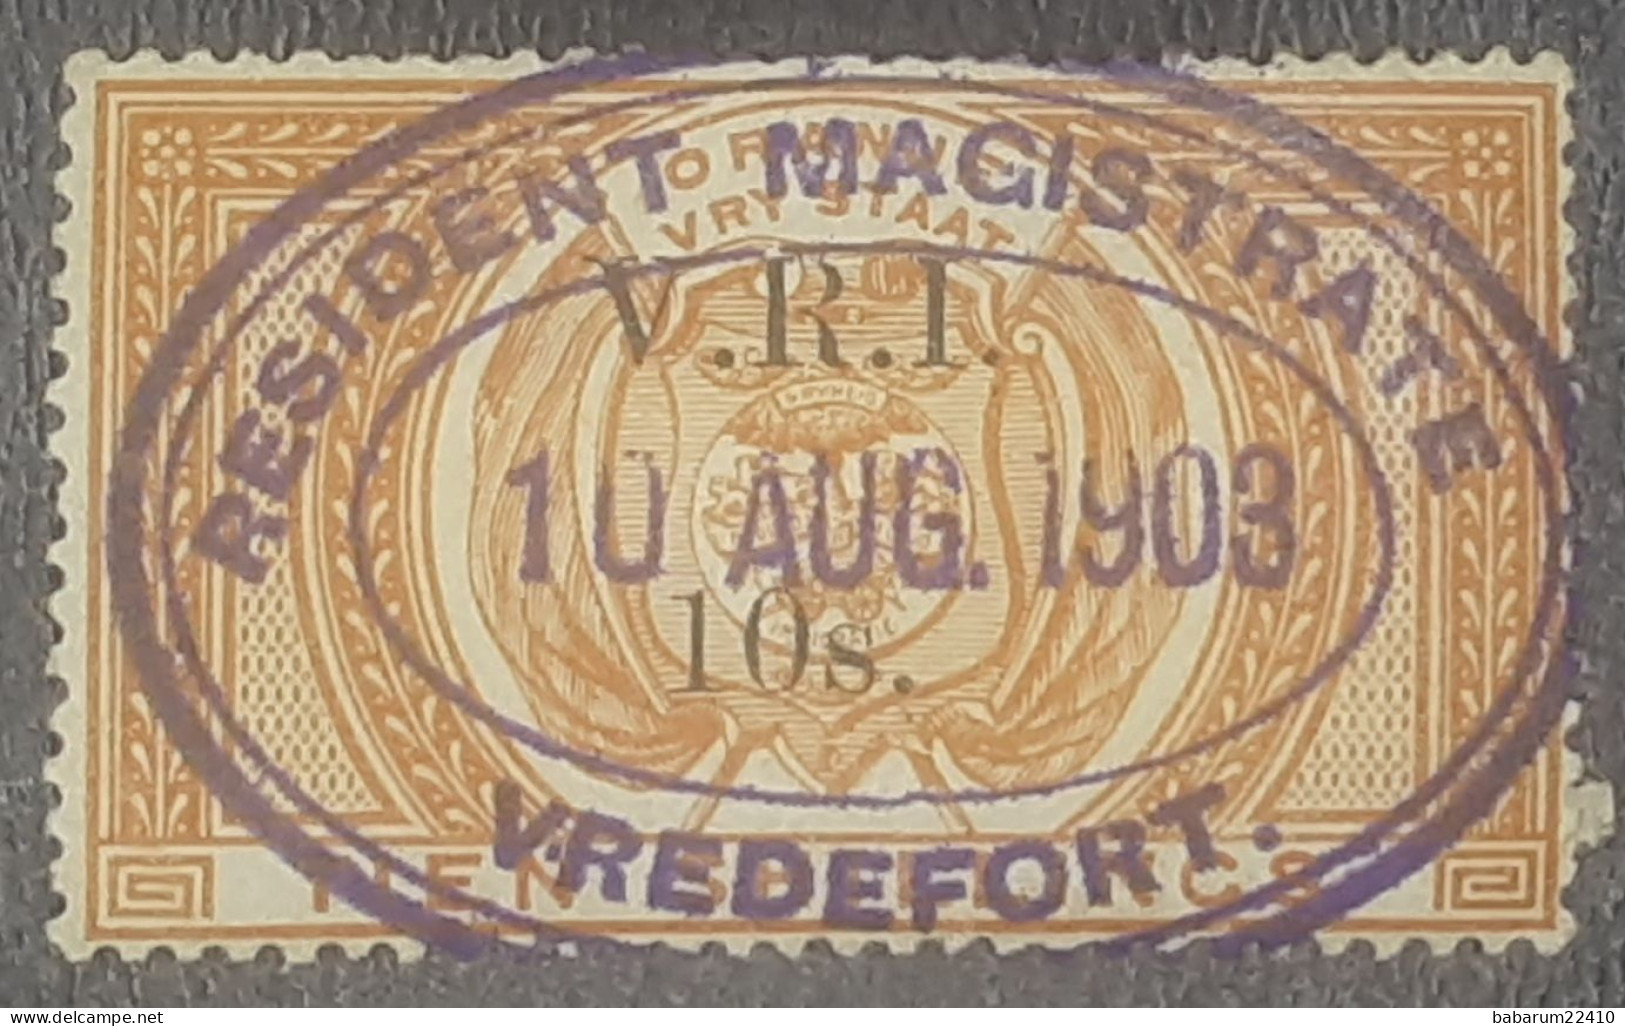 État Libre D Orange 1900 Fiscal 10 Shillings - Estado Libre De Orange (1868-1909)